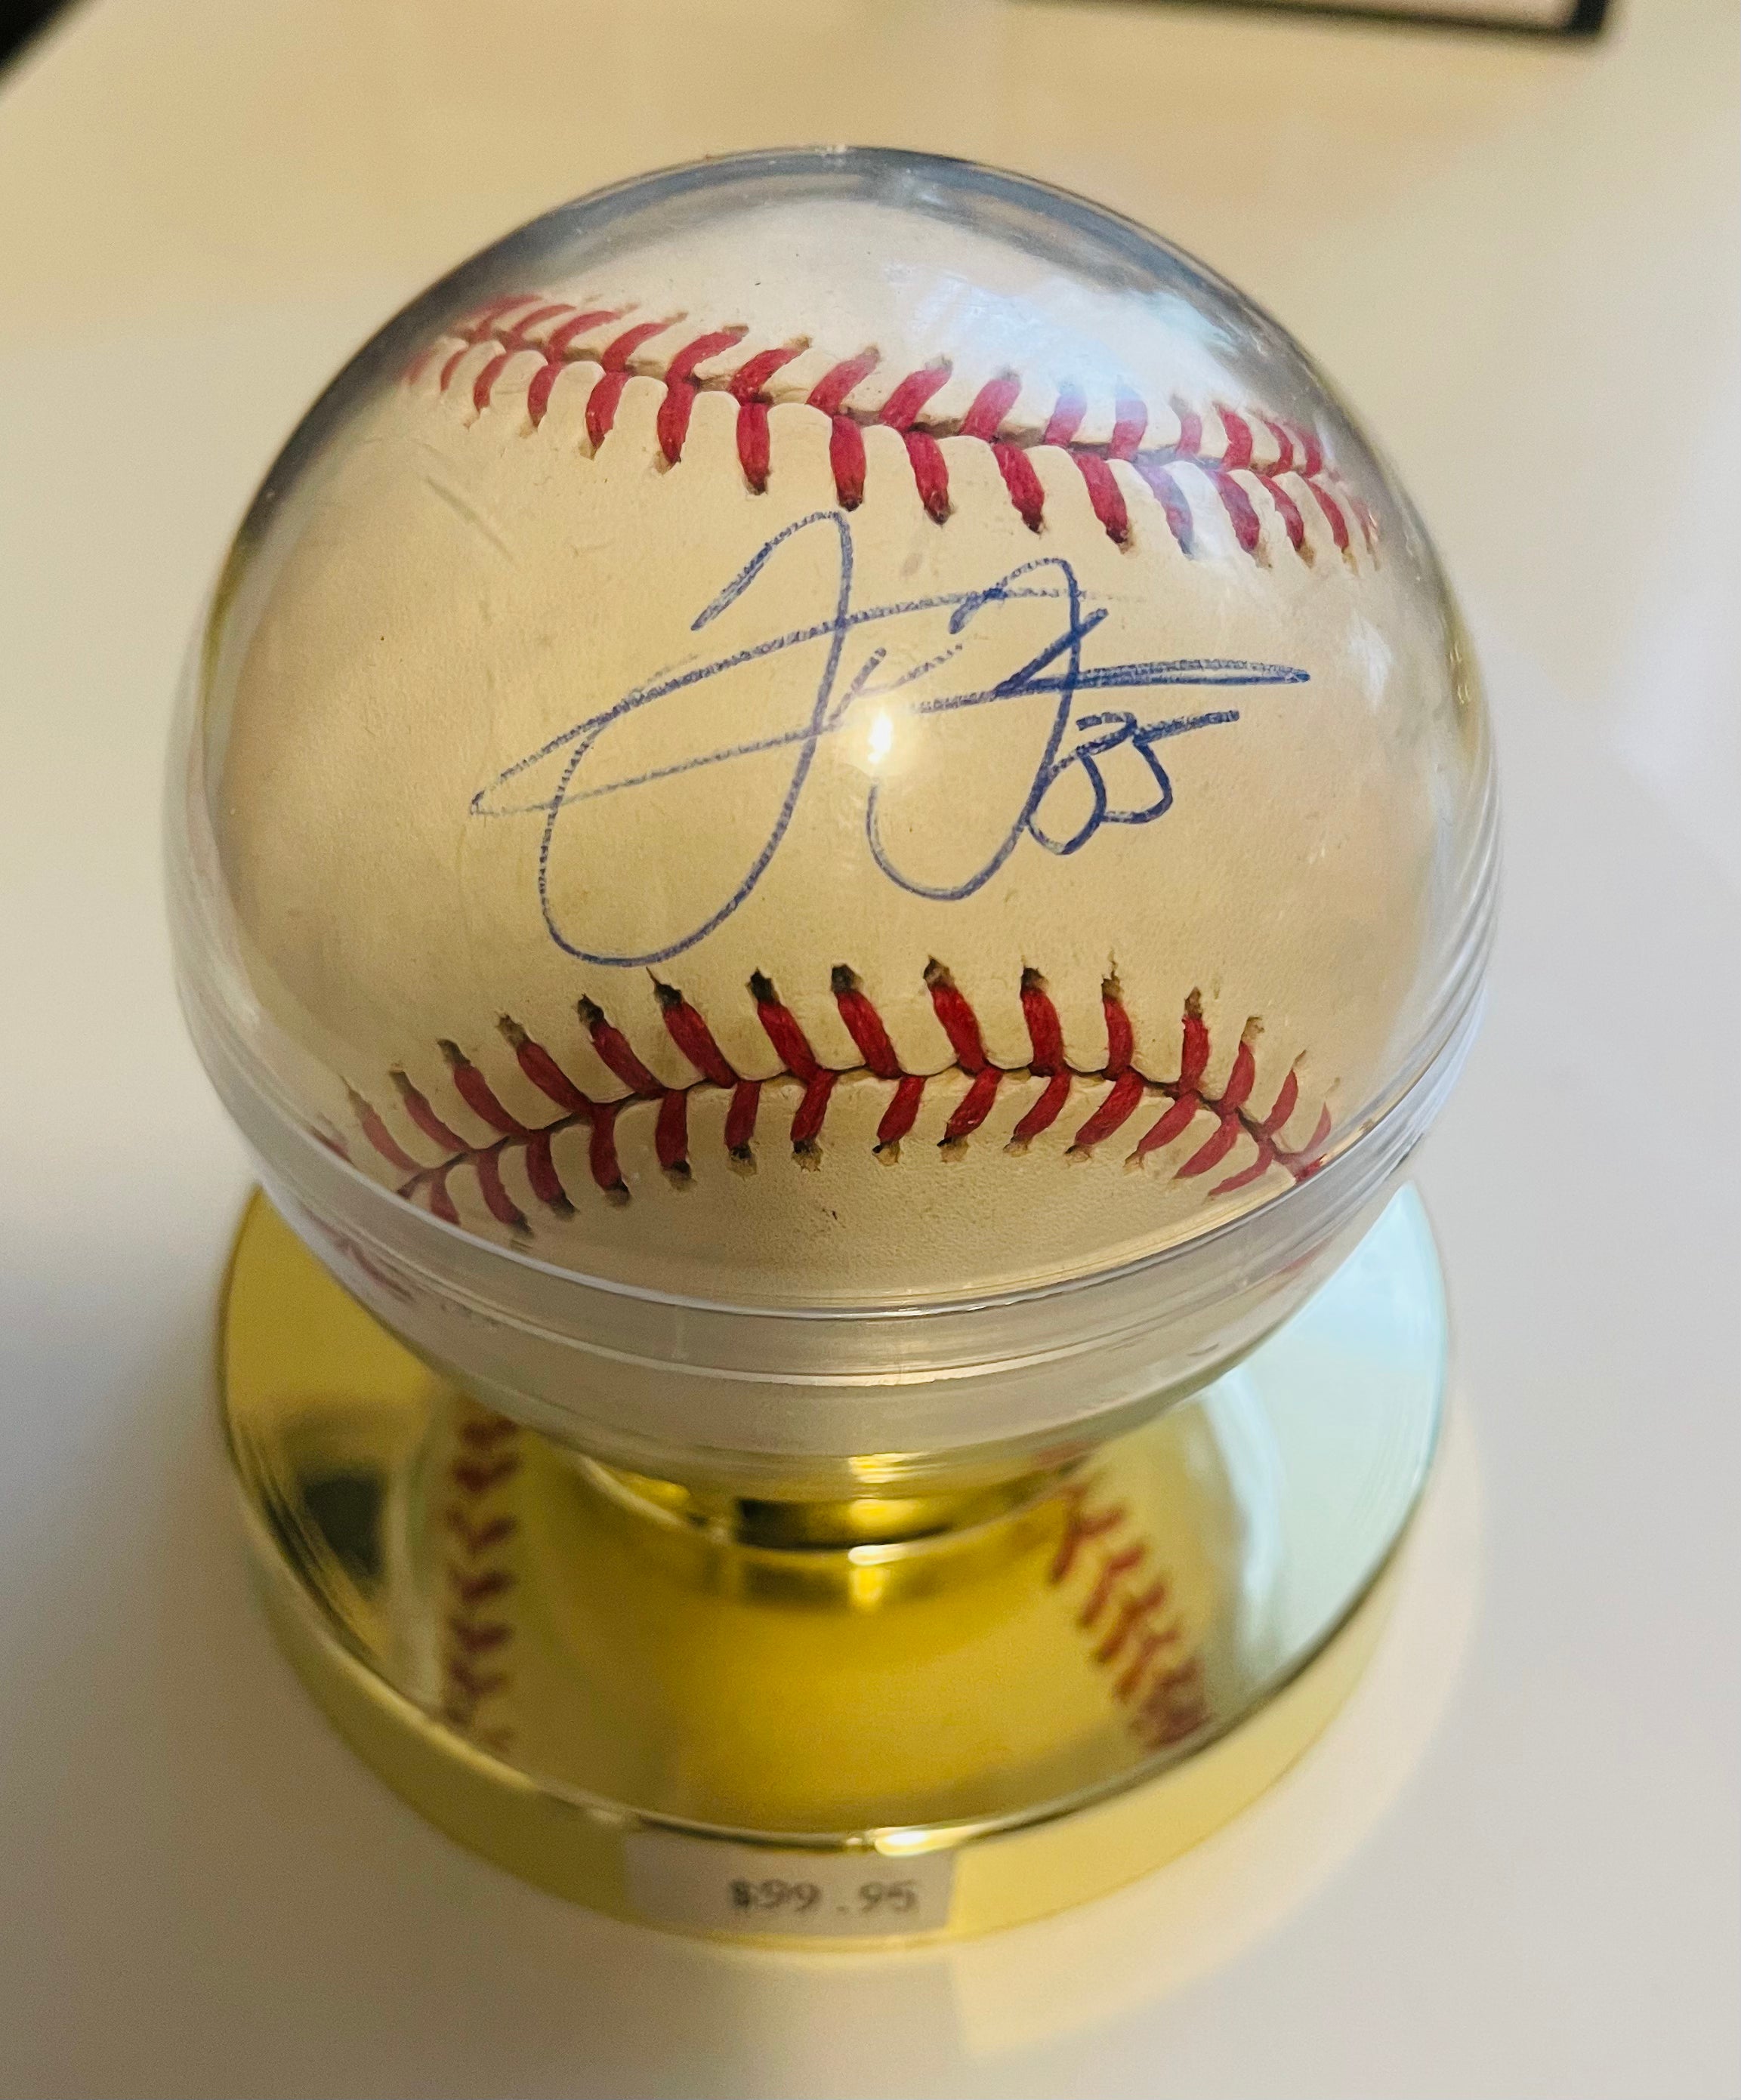 Frank Thomas autographed baseball with holder and COA